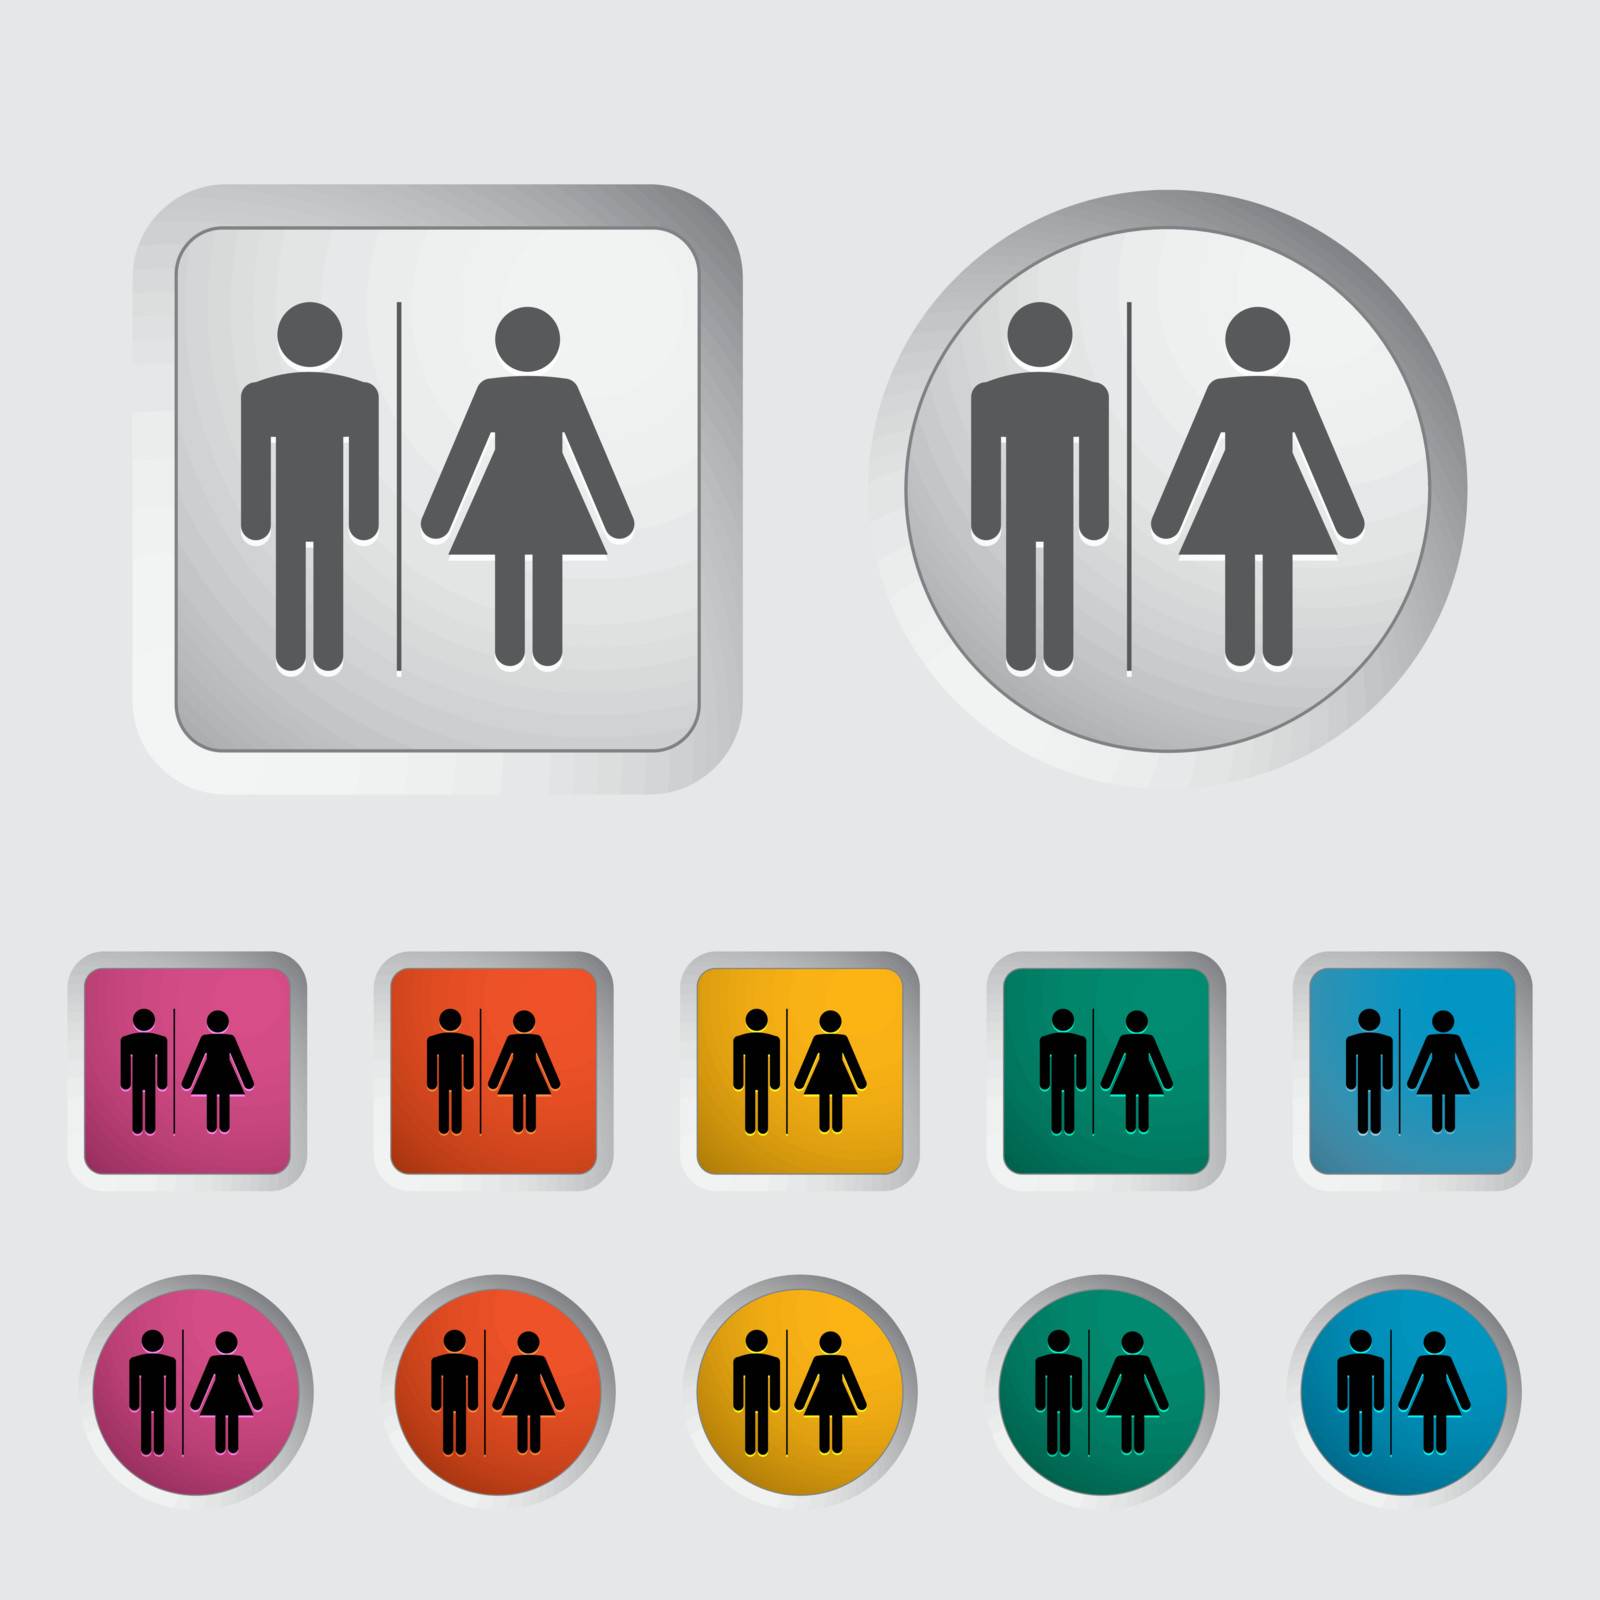 WC single icon. by smoki